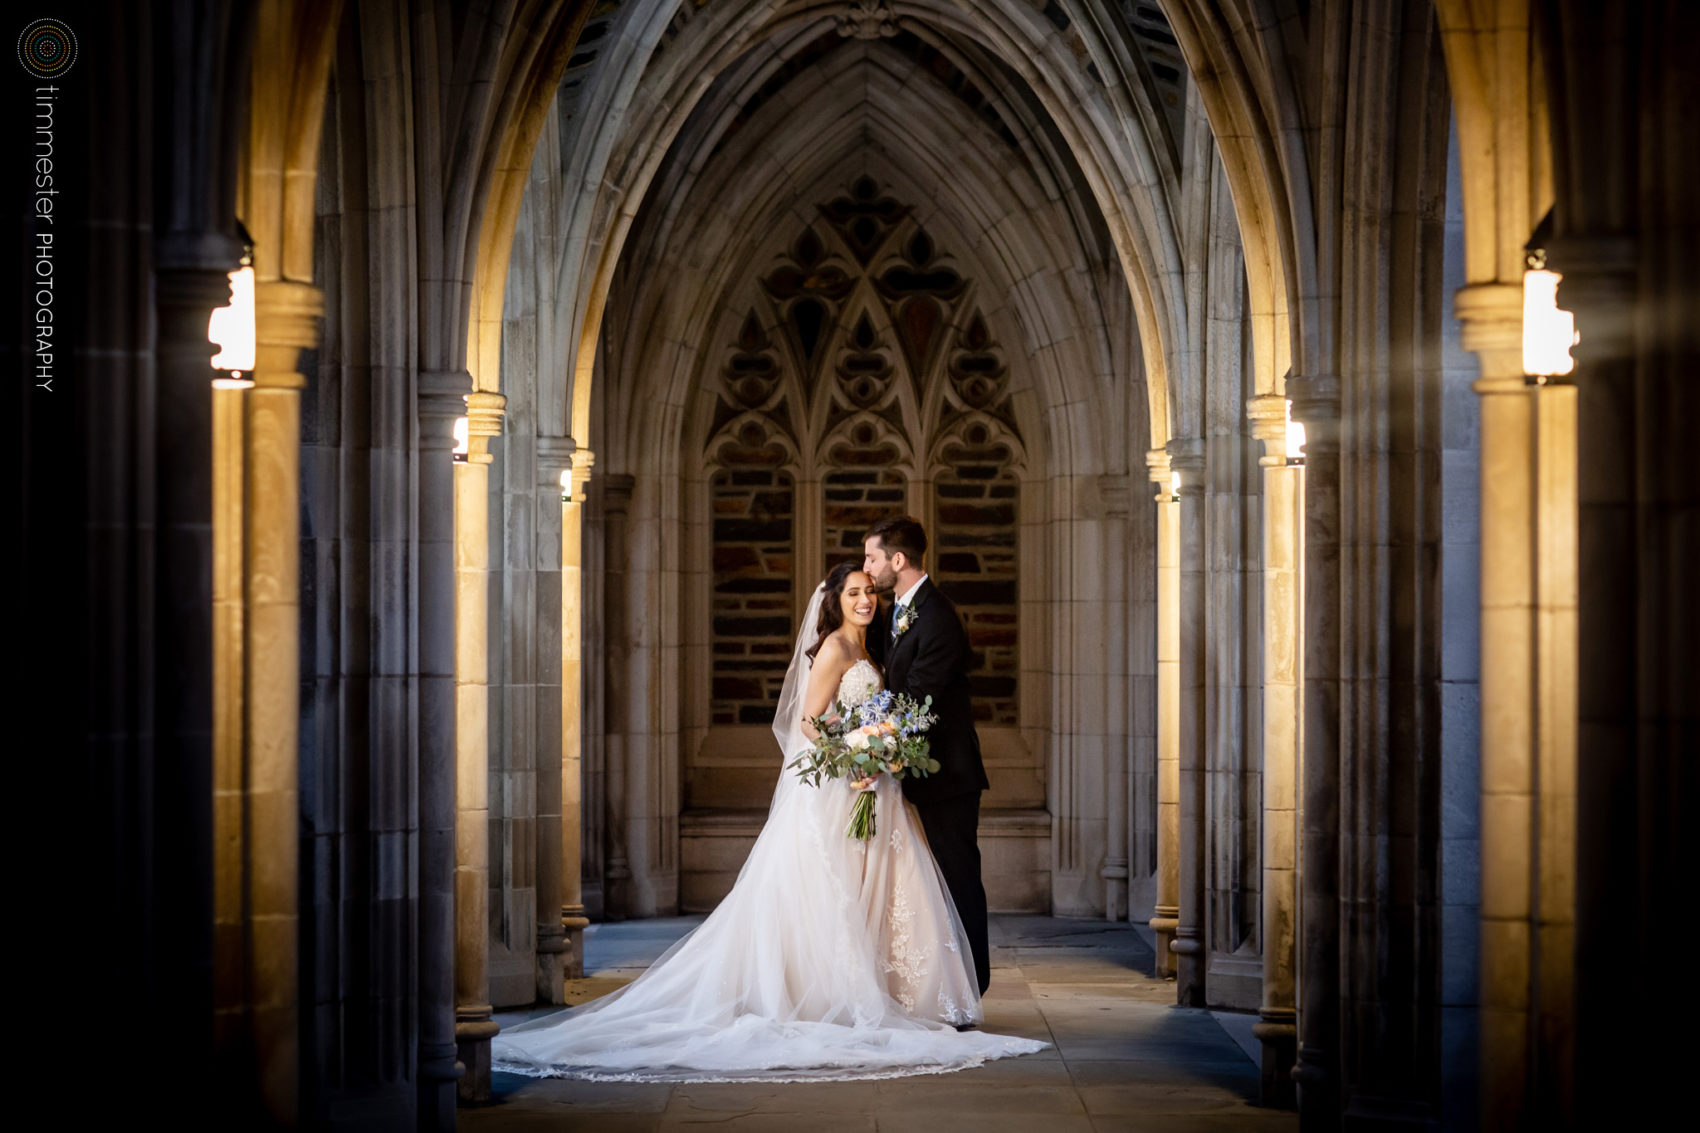 A wedding at the Duke University Chapel in Durham, North Carolina